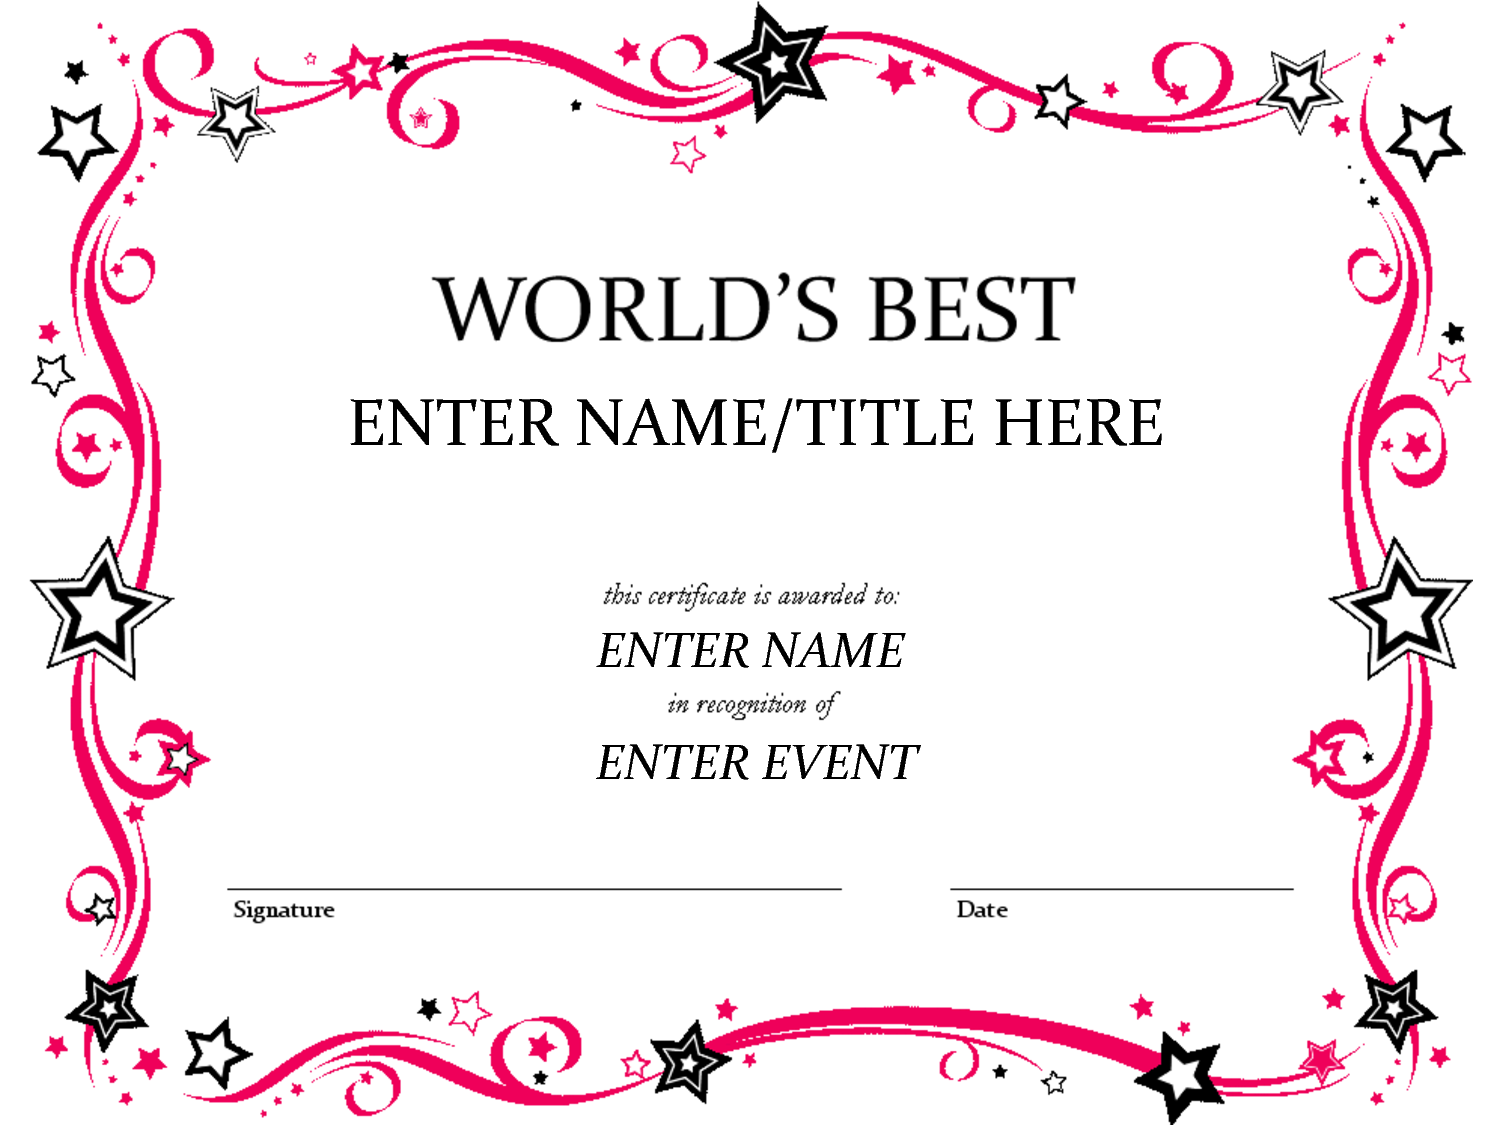 5 Best Images of Best Boss Certificate Printable Best Boss Award